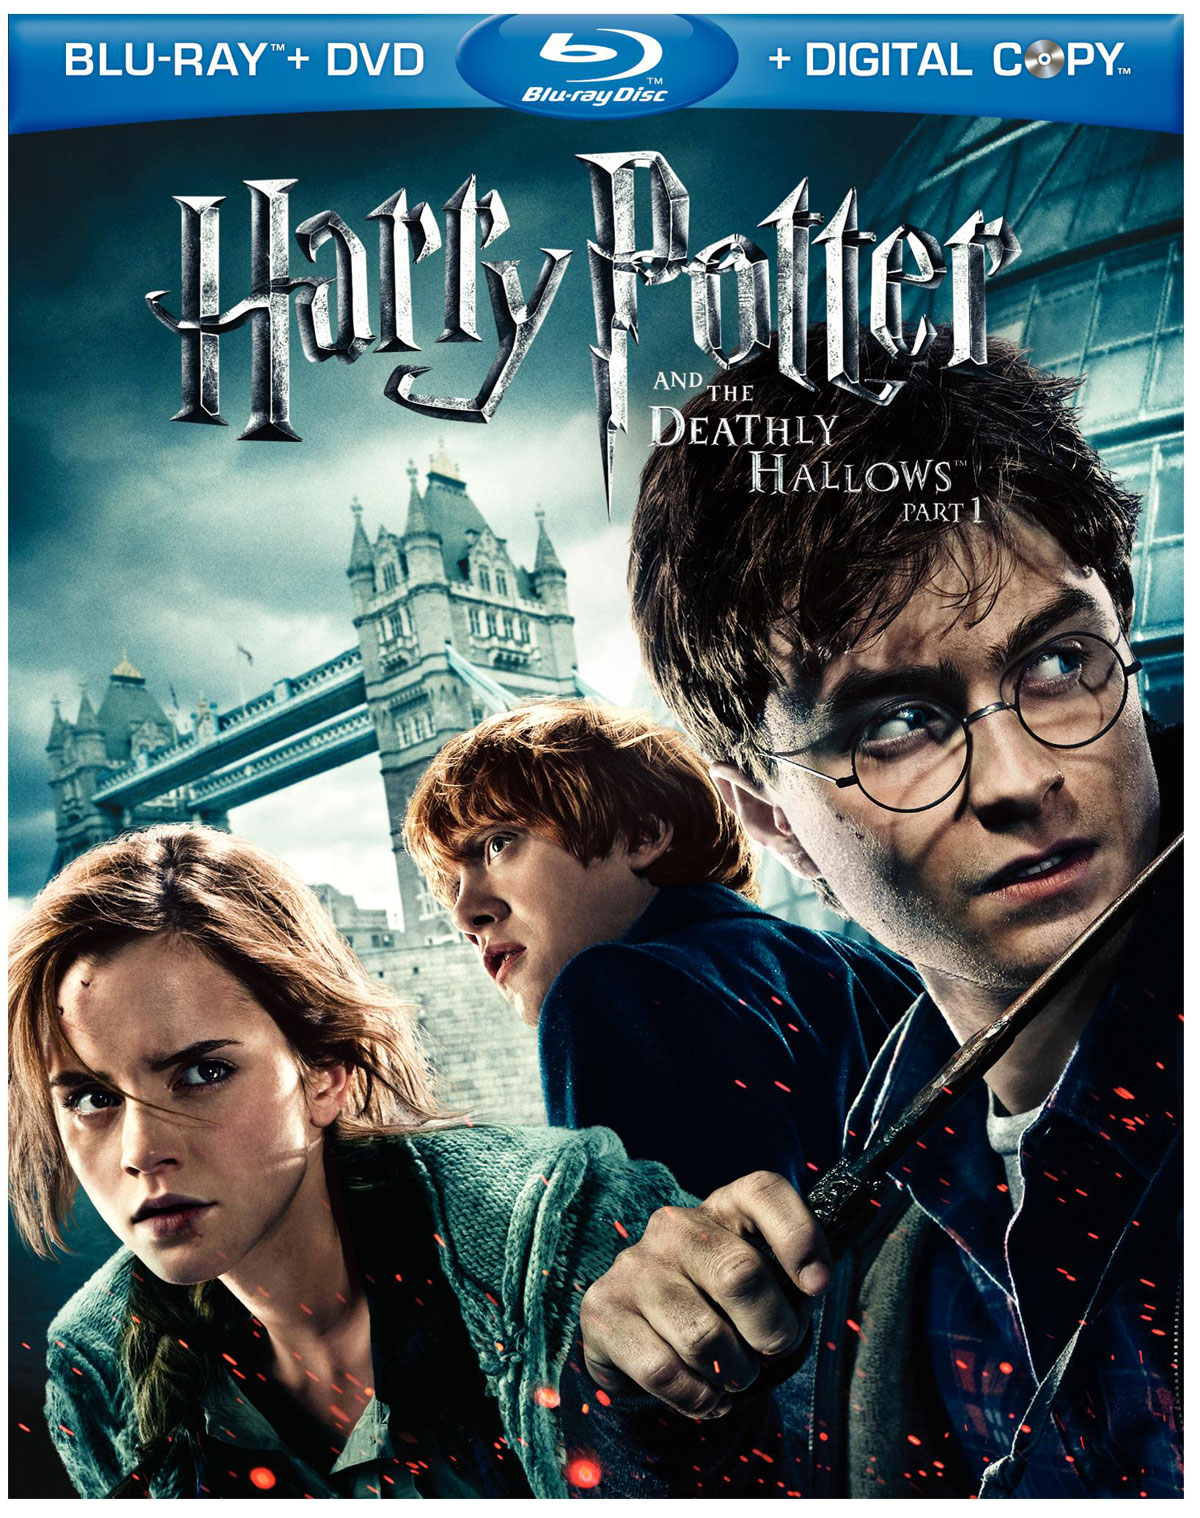 http://3.bp.blogspot.com/-38a7uI0dZiM/TZwArG6wFlI/AAAAAAAAE3A/Q7RMqz773t0/s1600/Harry-Potter-and-the-Deathly-Hallows-Part-1-Blu-ray-2.jpg